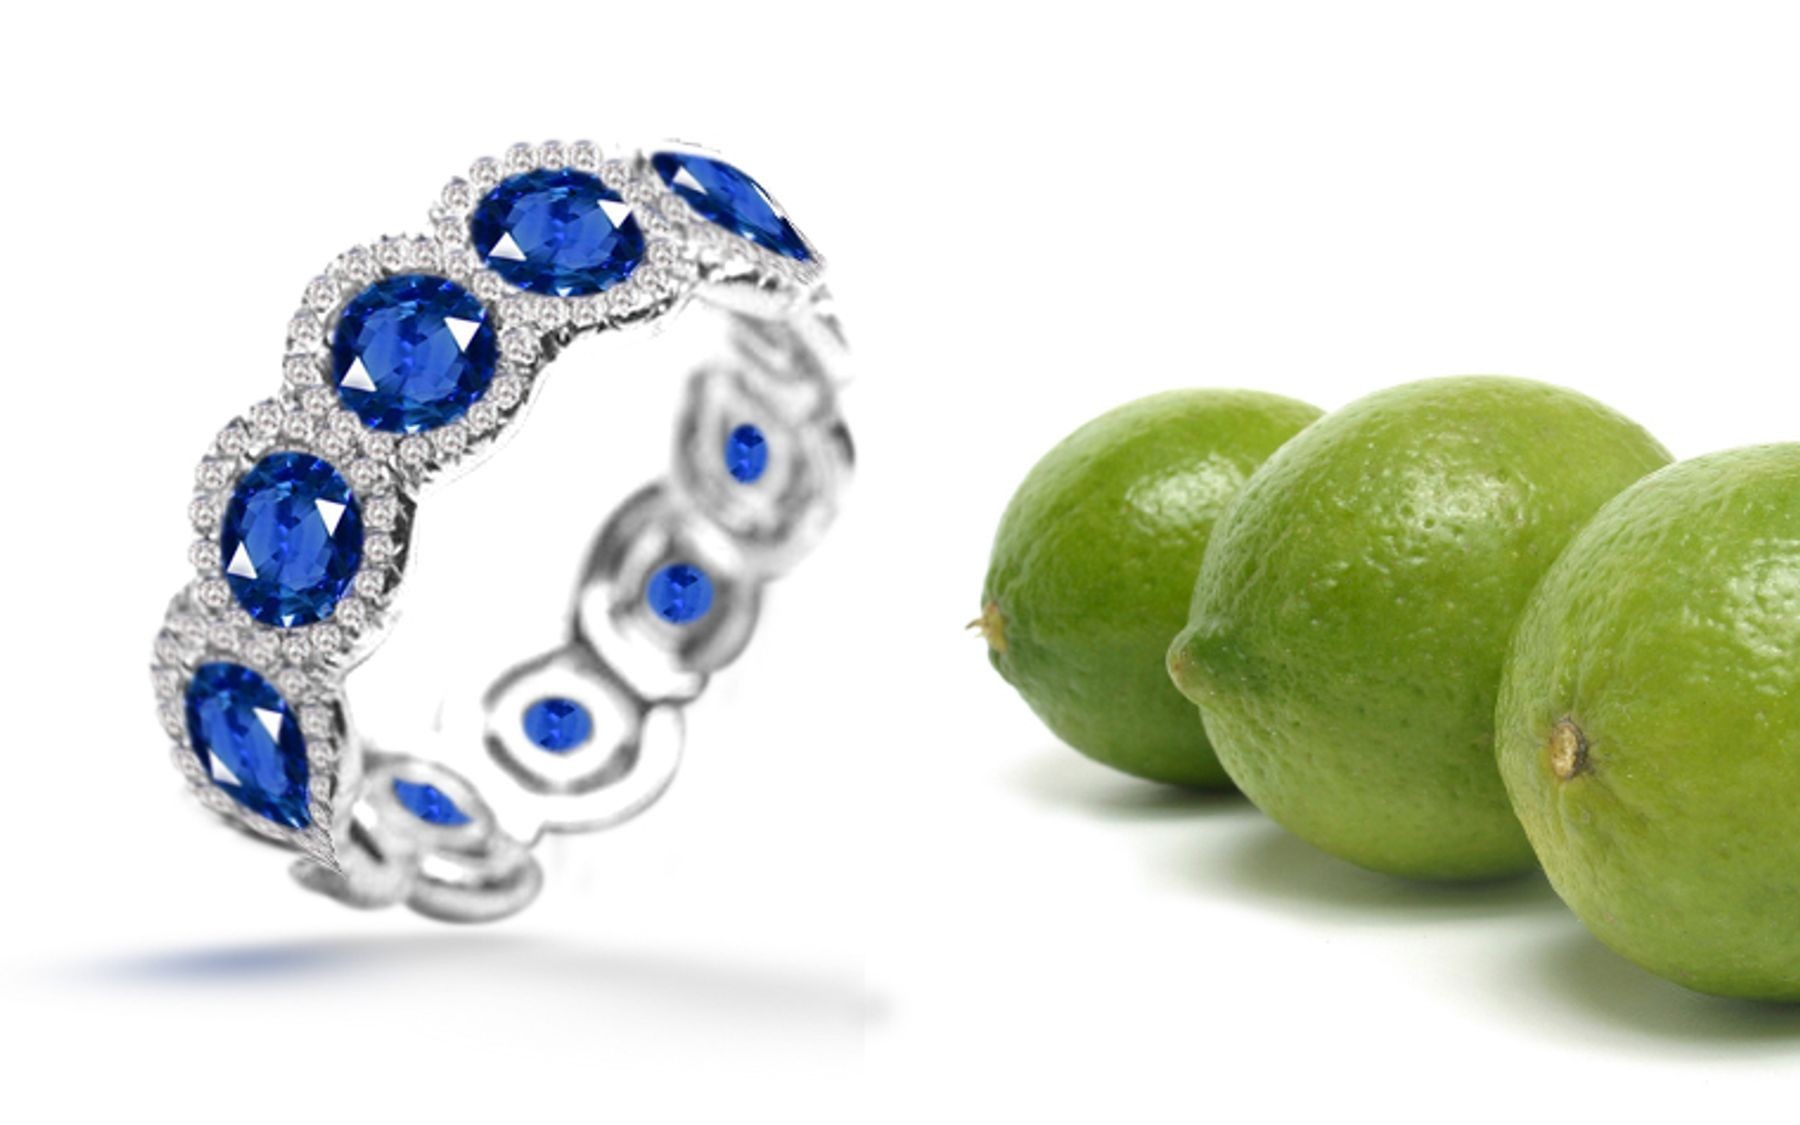 Pave Set Diamond & Round Blue Sapphire Eternity Ring